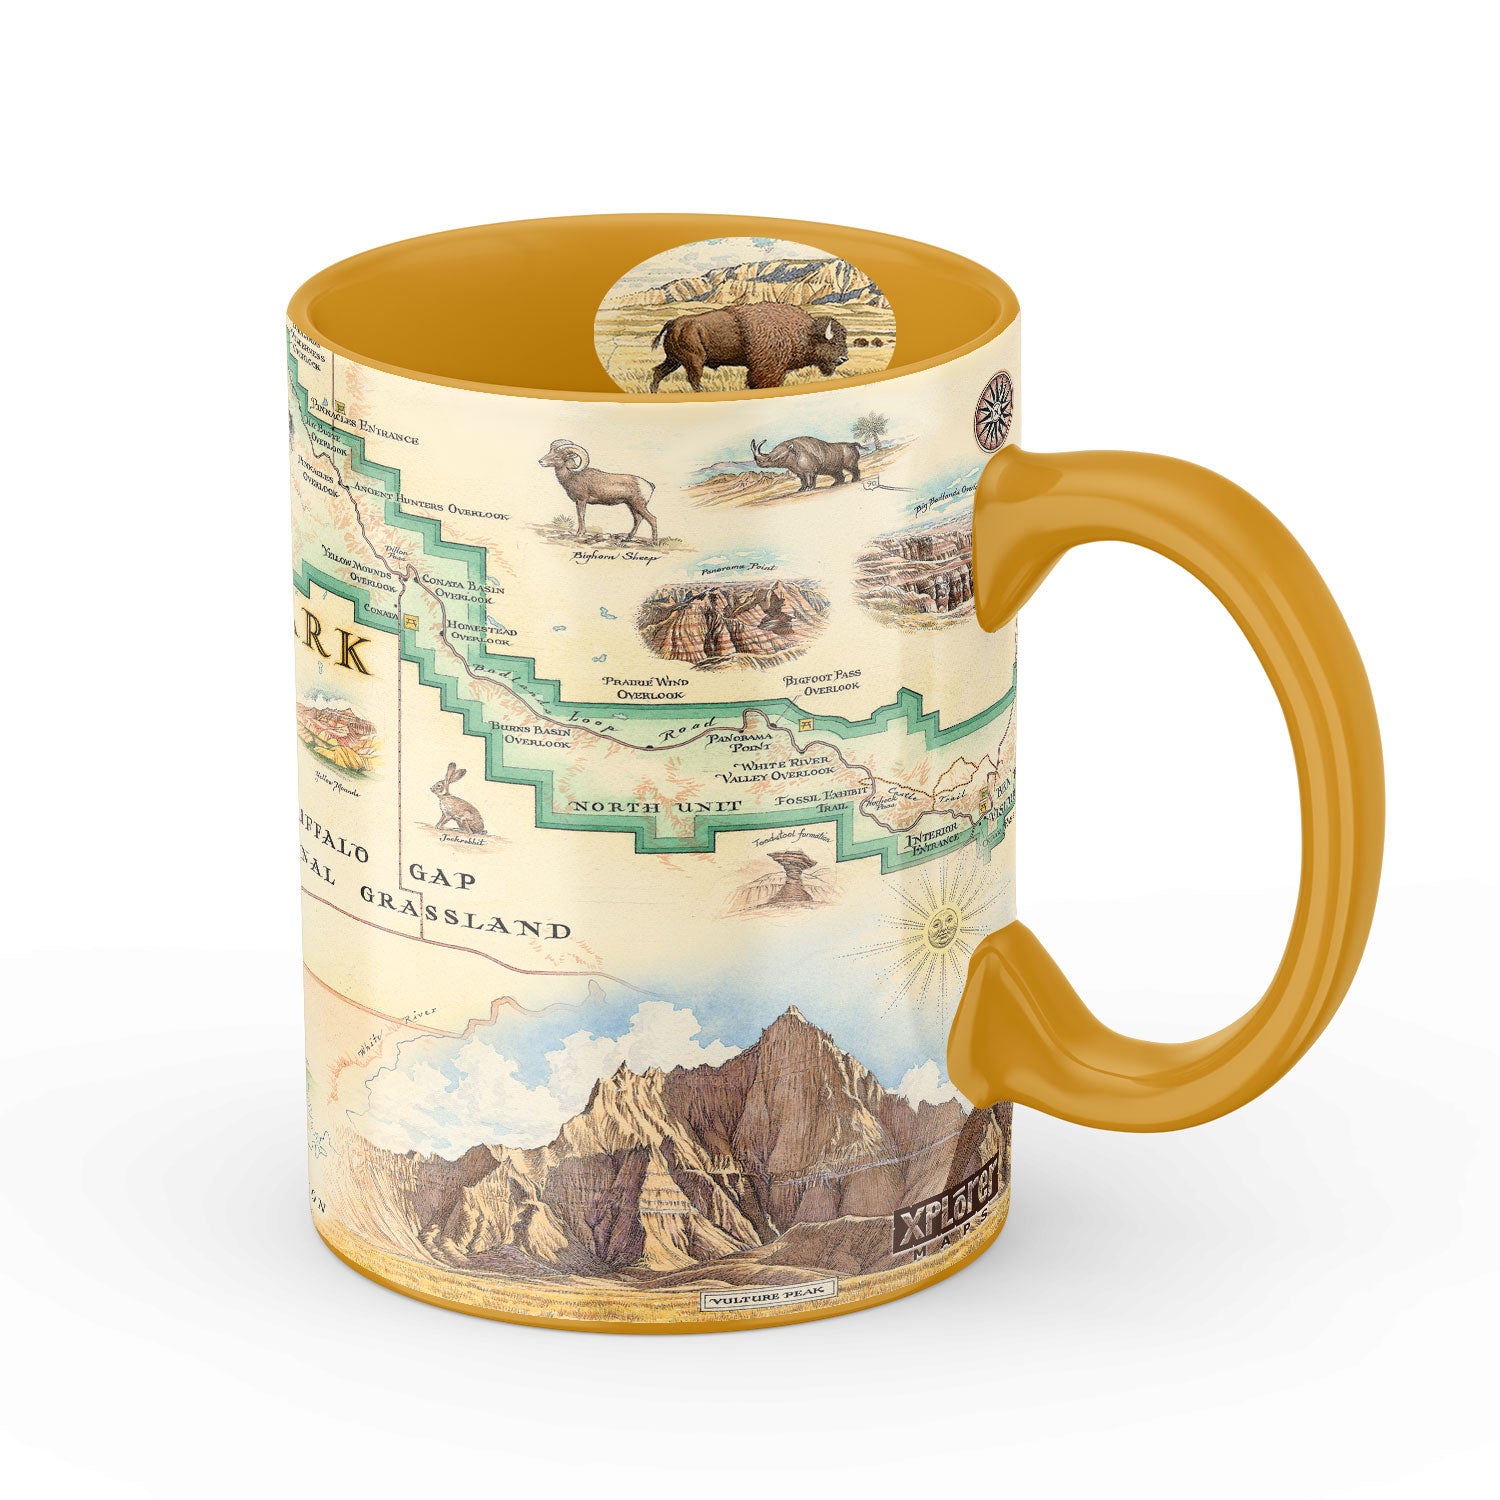 Badlands National Park Map ceramic mug in earth tone colors. Featuring Bison, deer, dinosaurs, Buffalo Gap Grasslands, fox. 